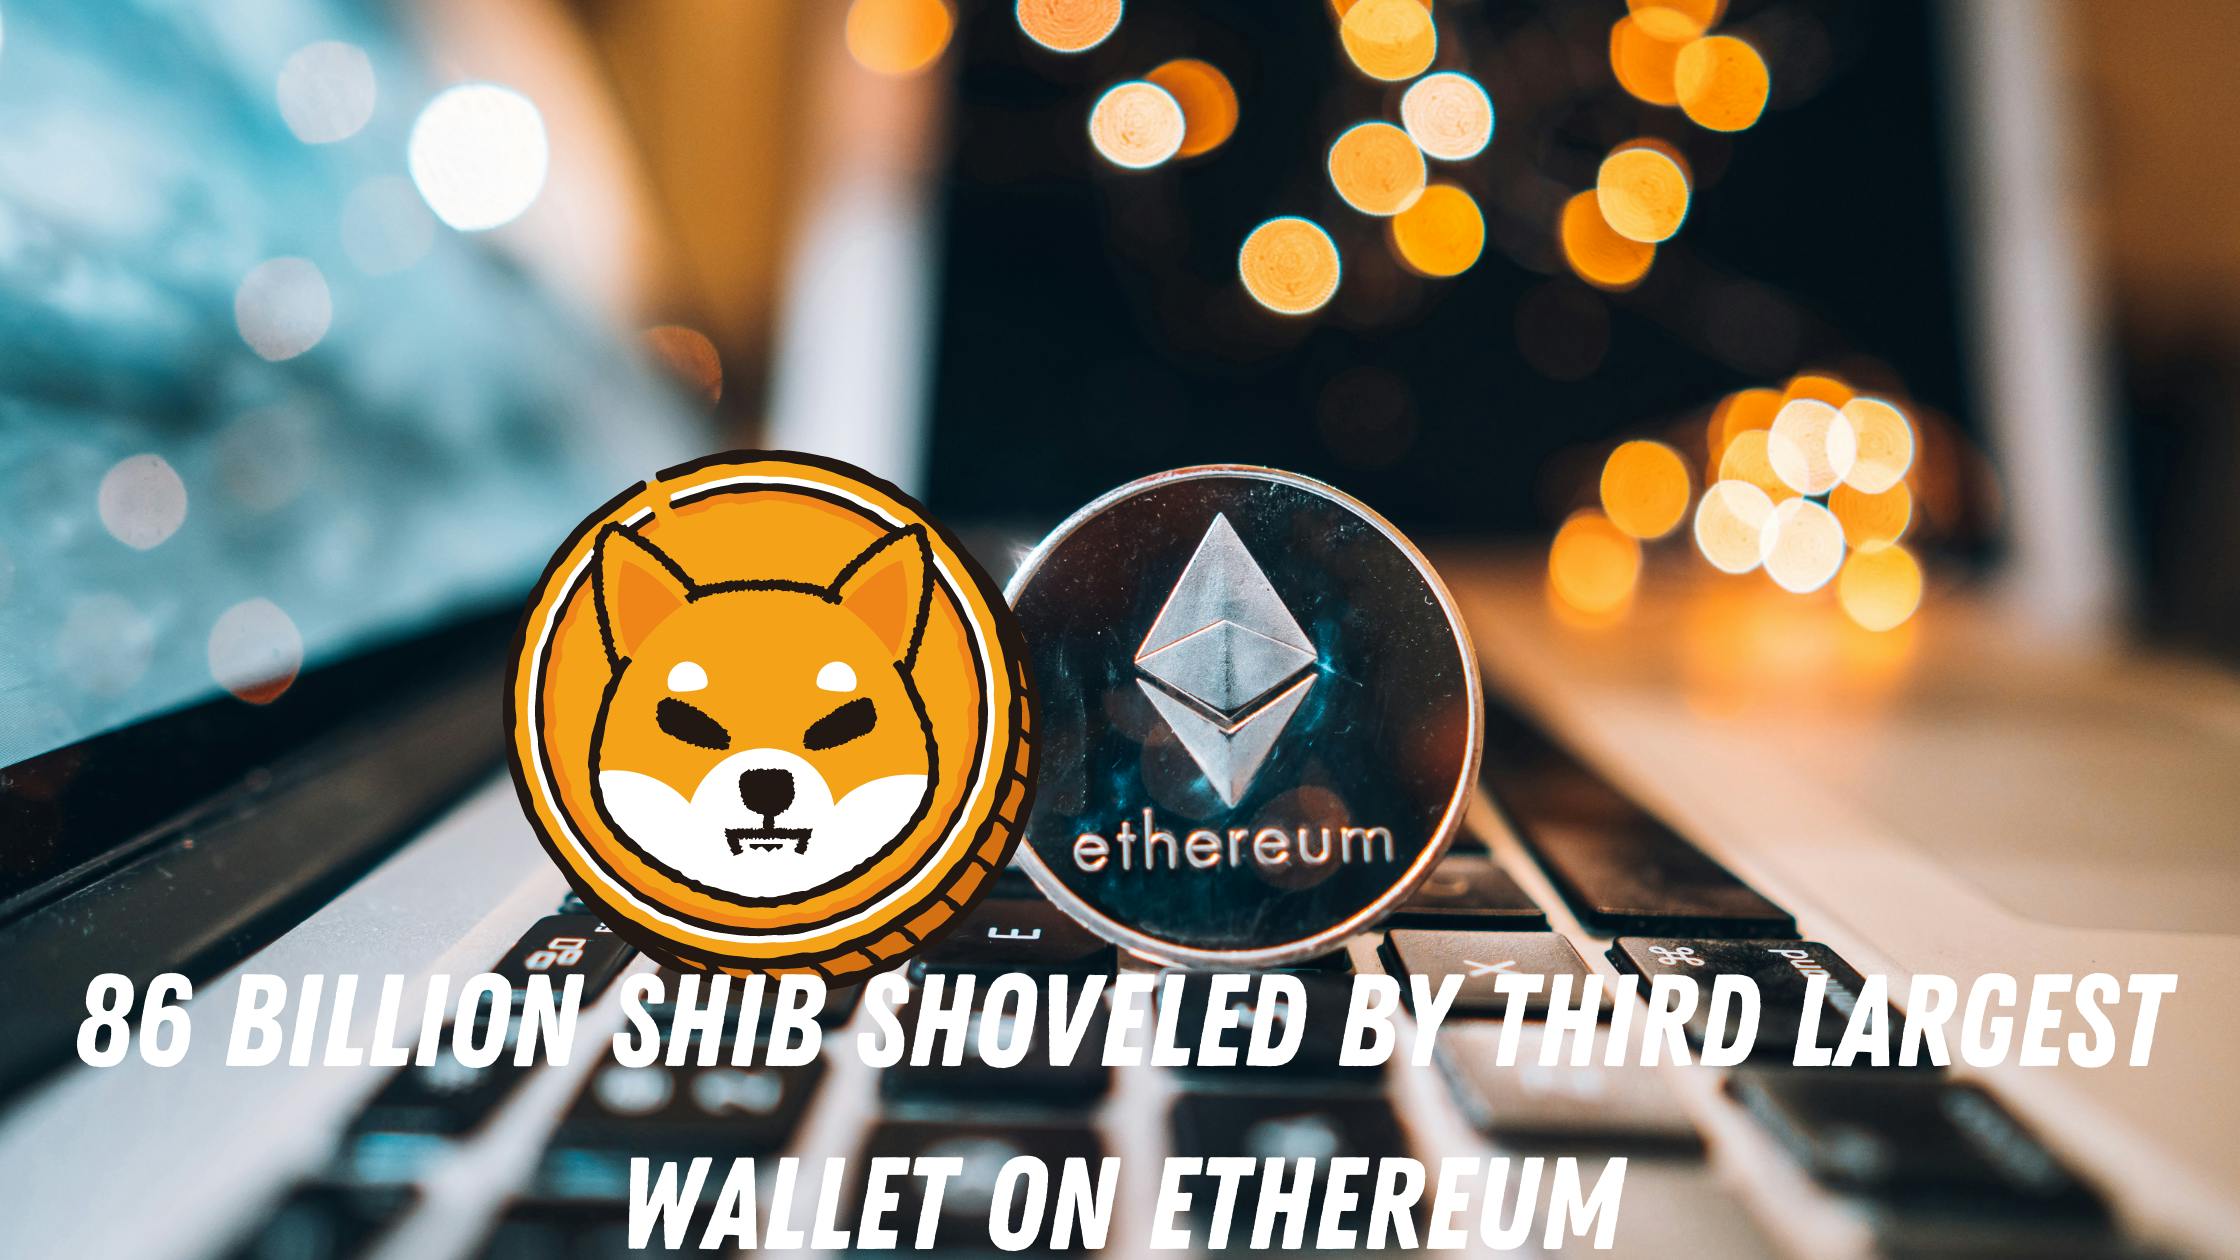 86 Billion SHIB Shoveled by Third Largest Wallet on Ethereum